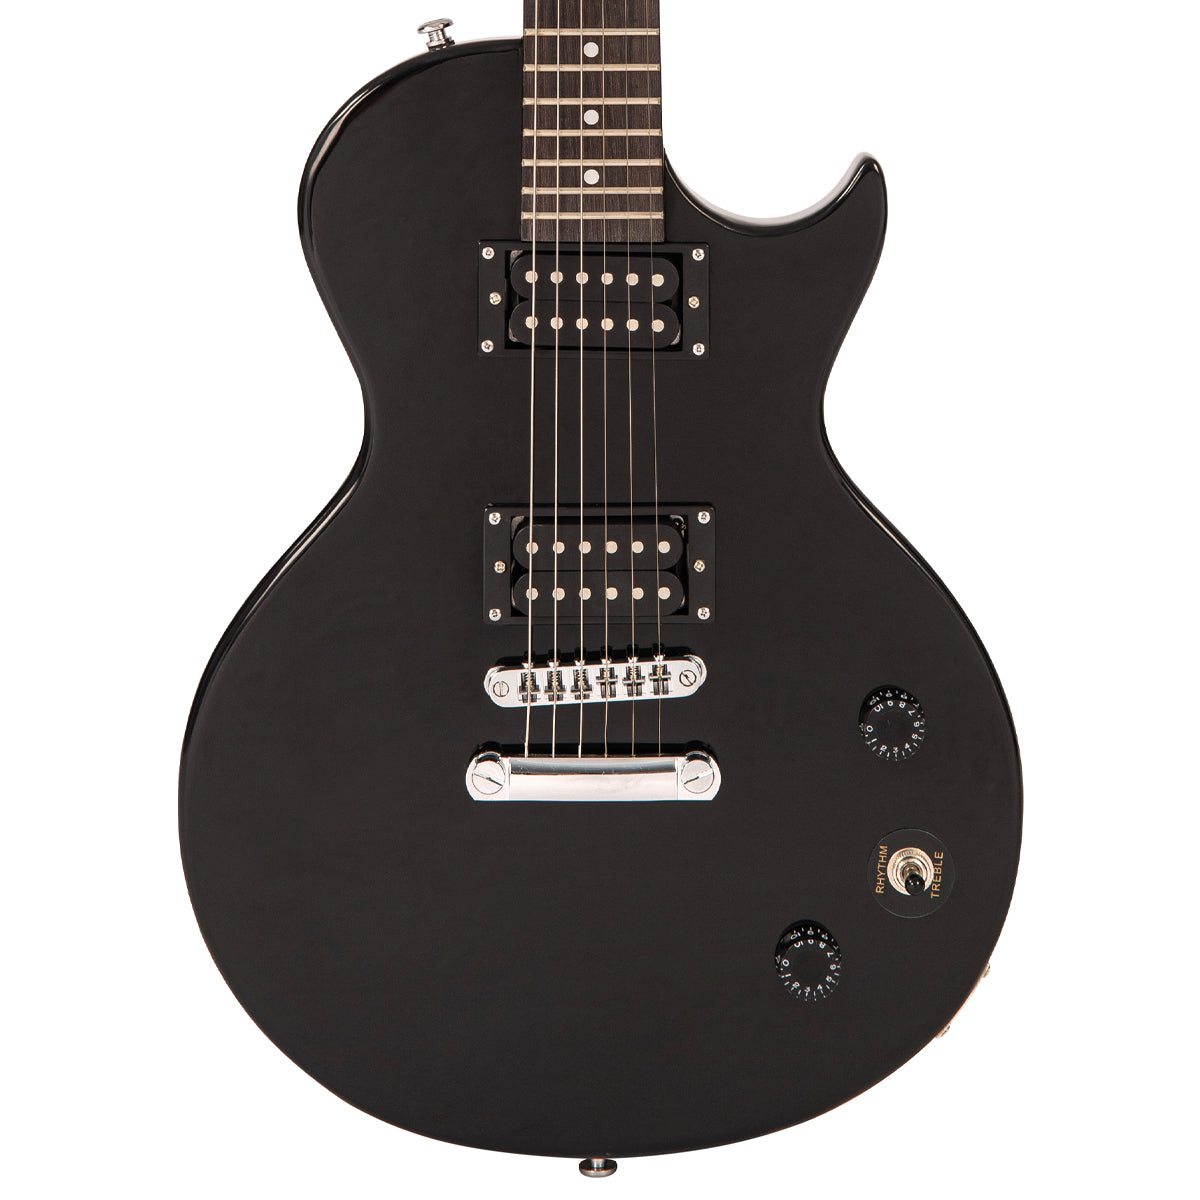 Encore Blaster E90 Electric Guitar Pack ~ Gloss Black